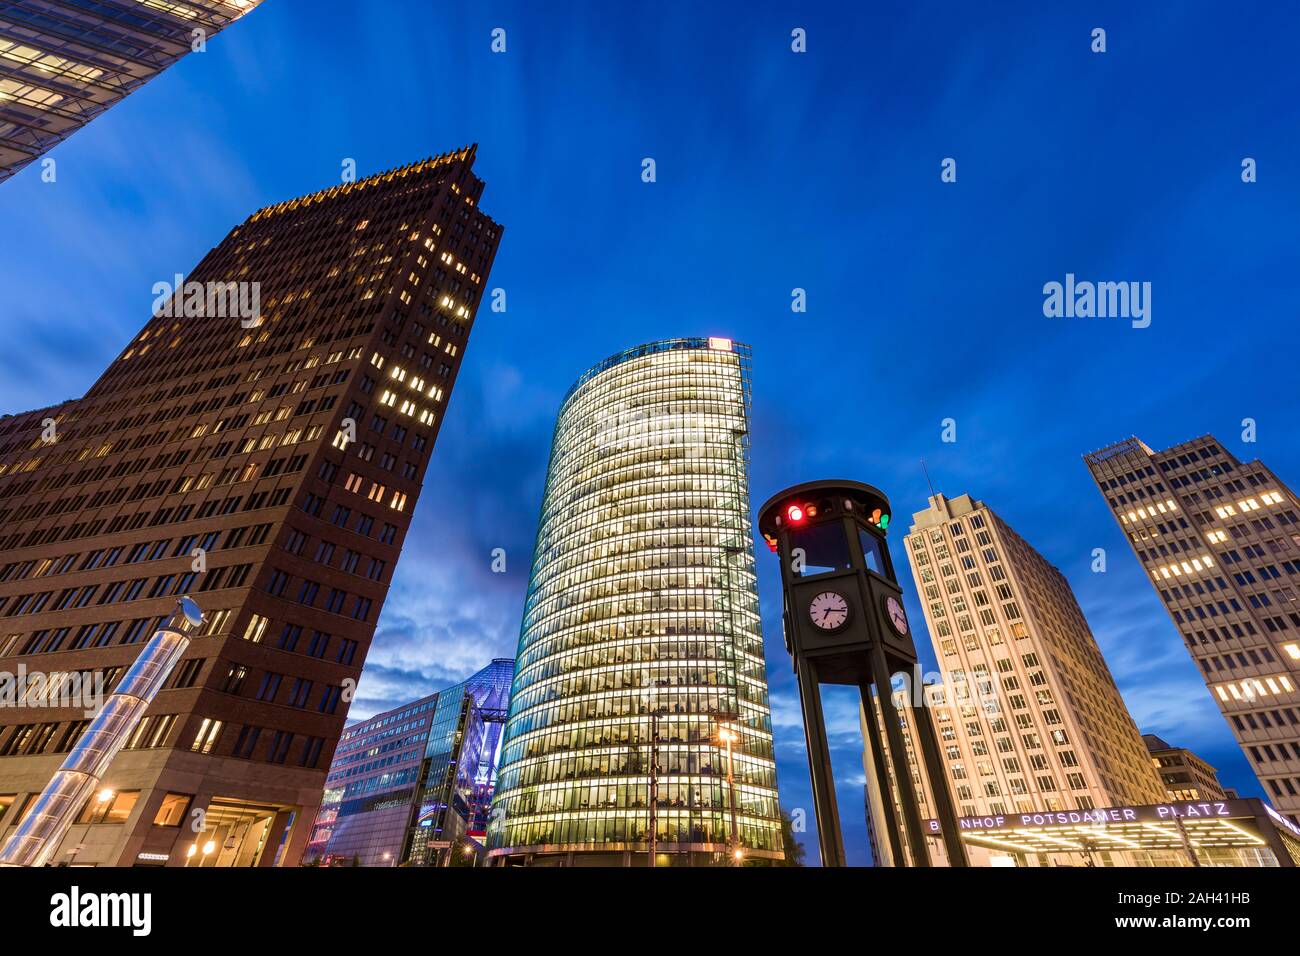 Germania, Berlino Mitte, Potsdamer Platz, Kollhoff-Tower, Bahntower, Beisheim-Center, basso angolo vista dei grattacieli al crepuscolo Foto Stock